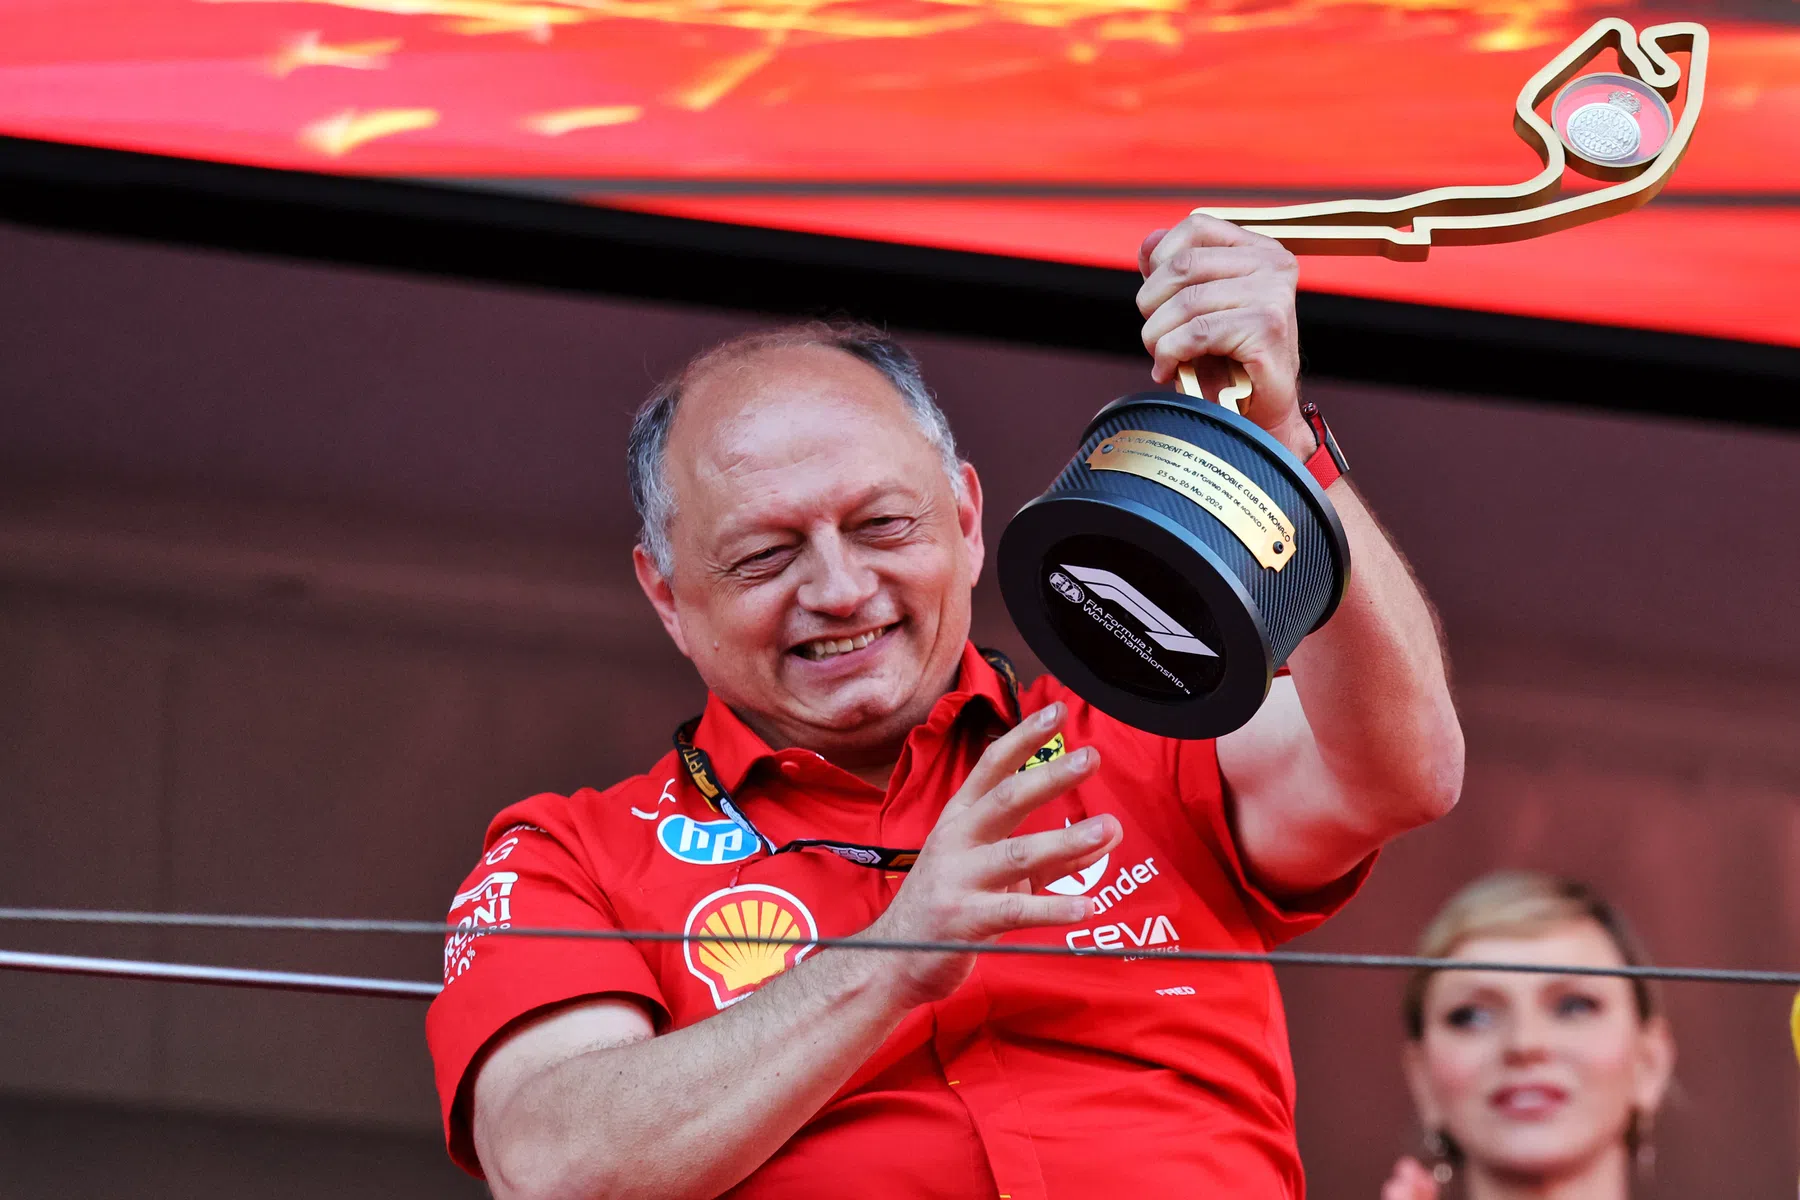 Bernie Collins shares how Vasseur has brought more confidence to Ferrari